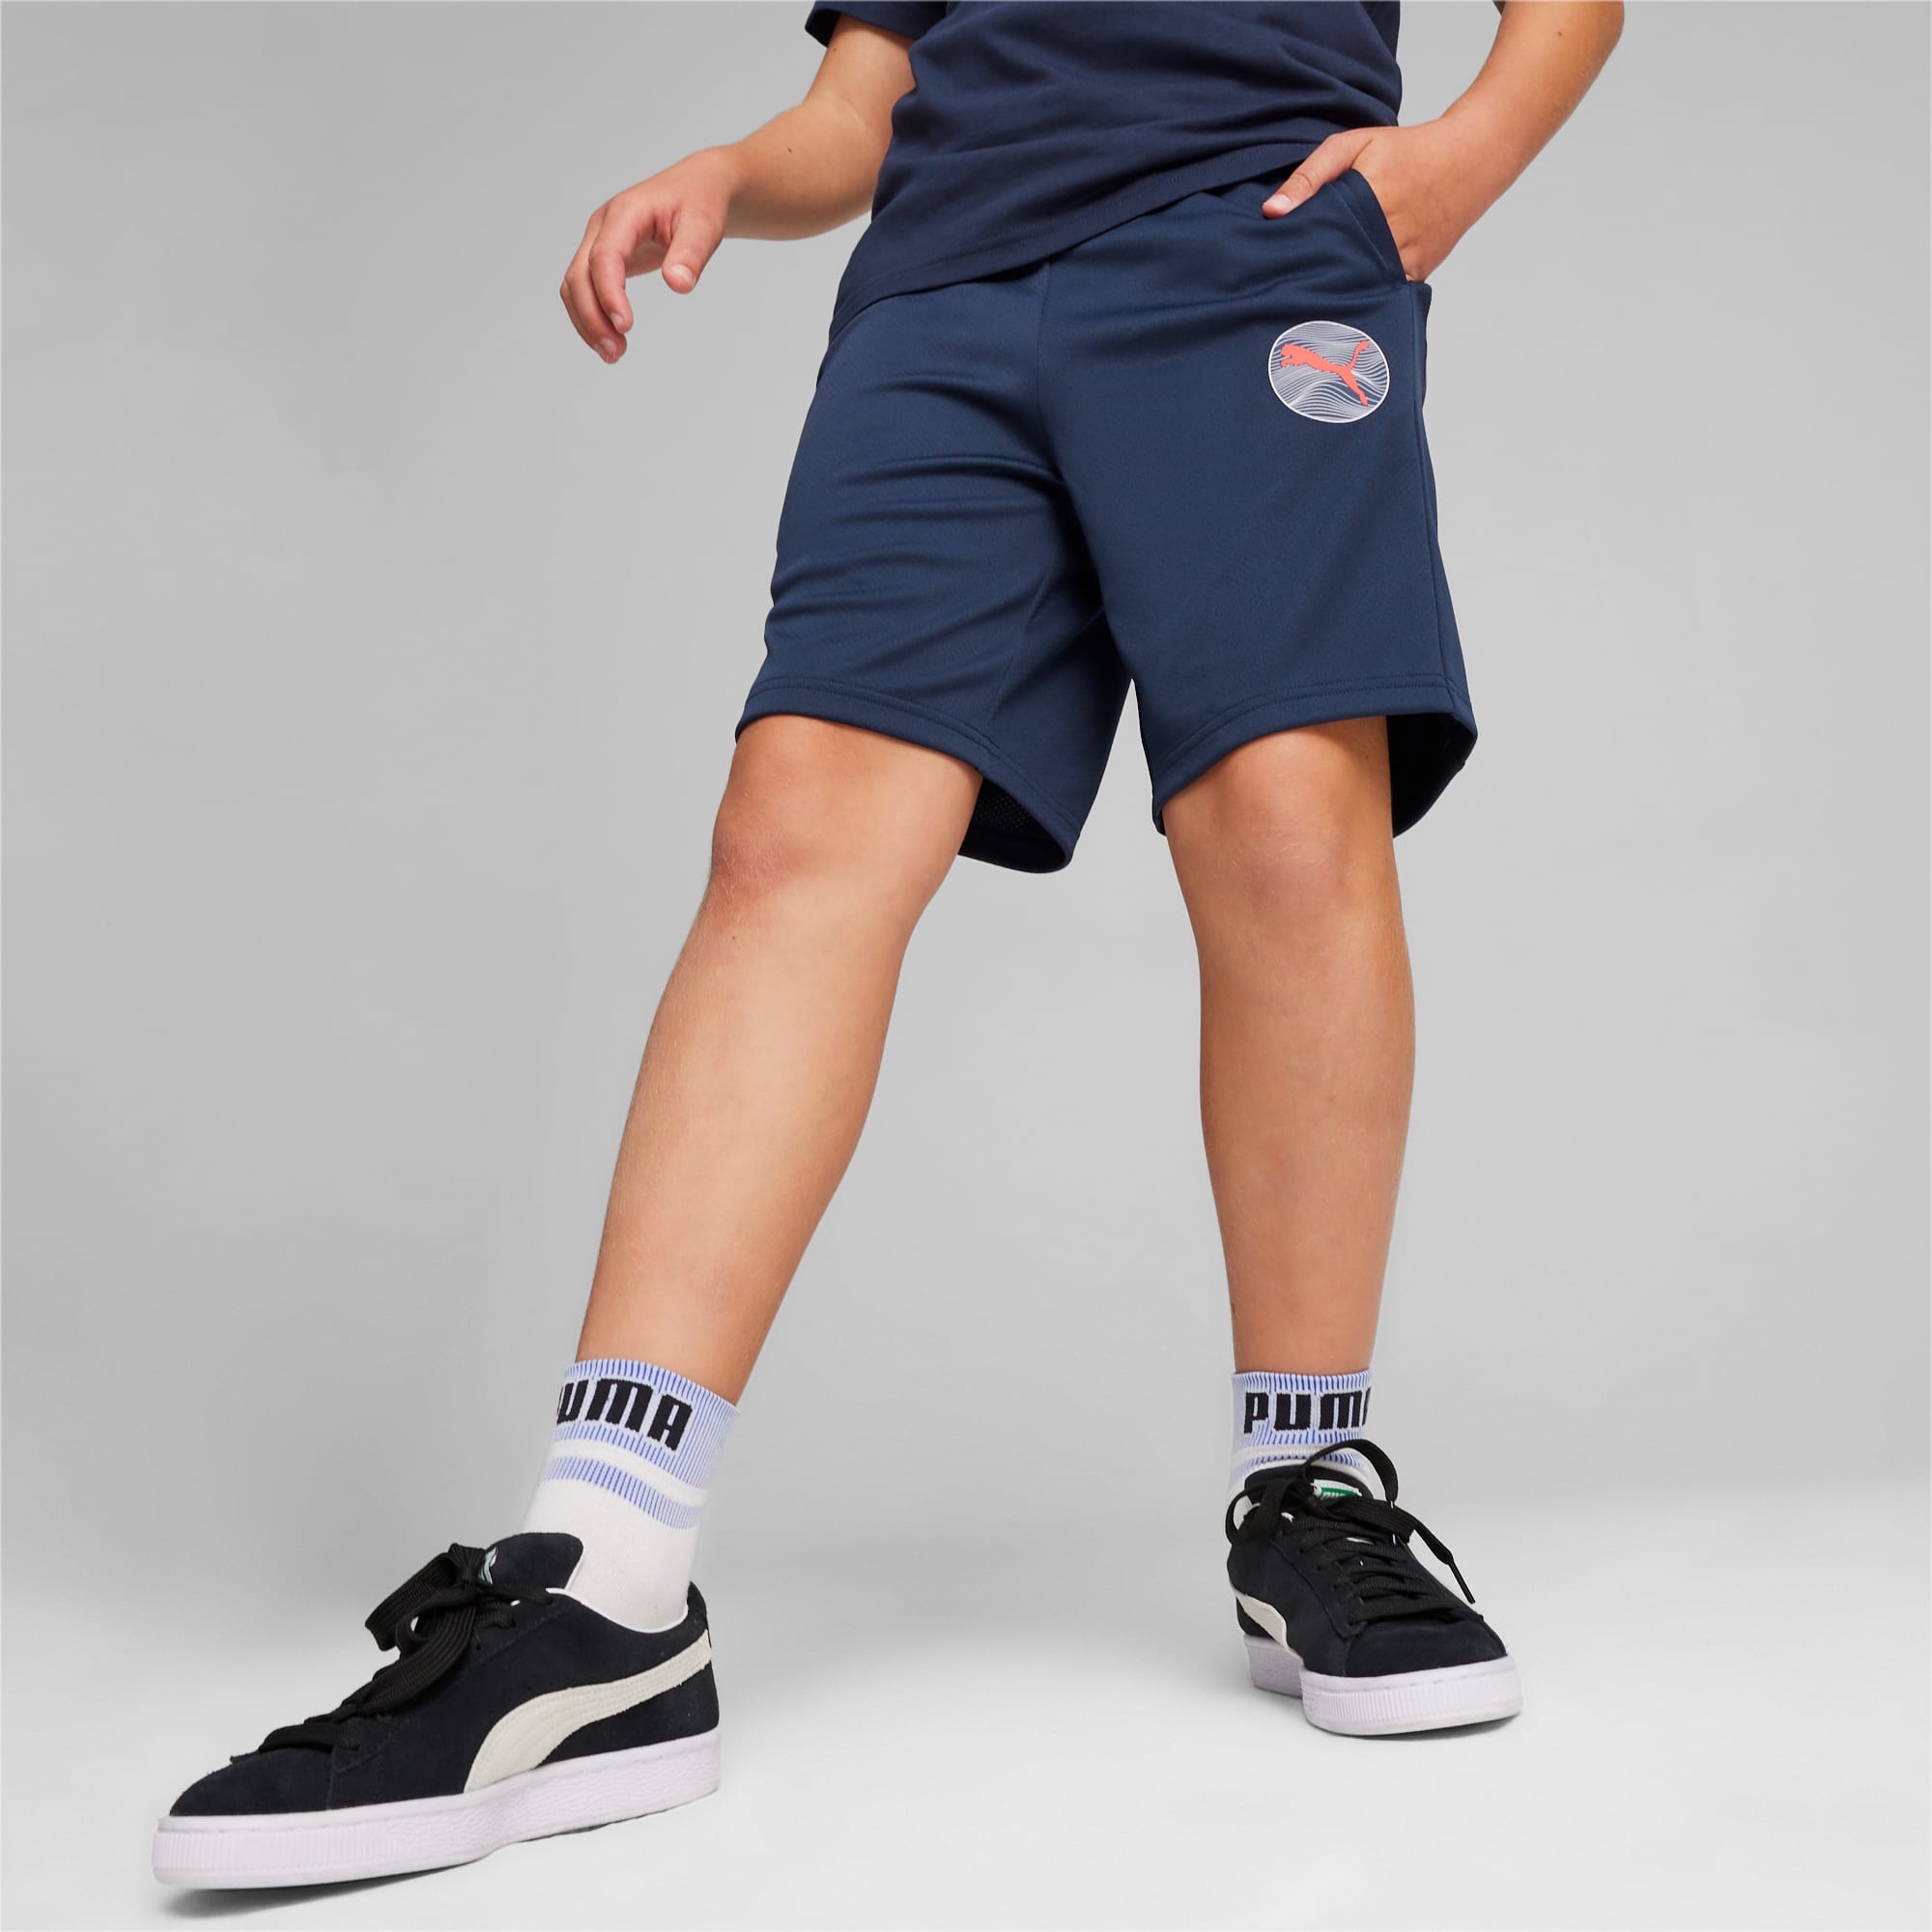 PUMA Active Sports Youth Shorts, Dark Blue, Size 116, Clothing